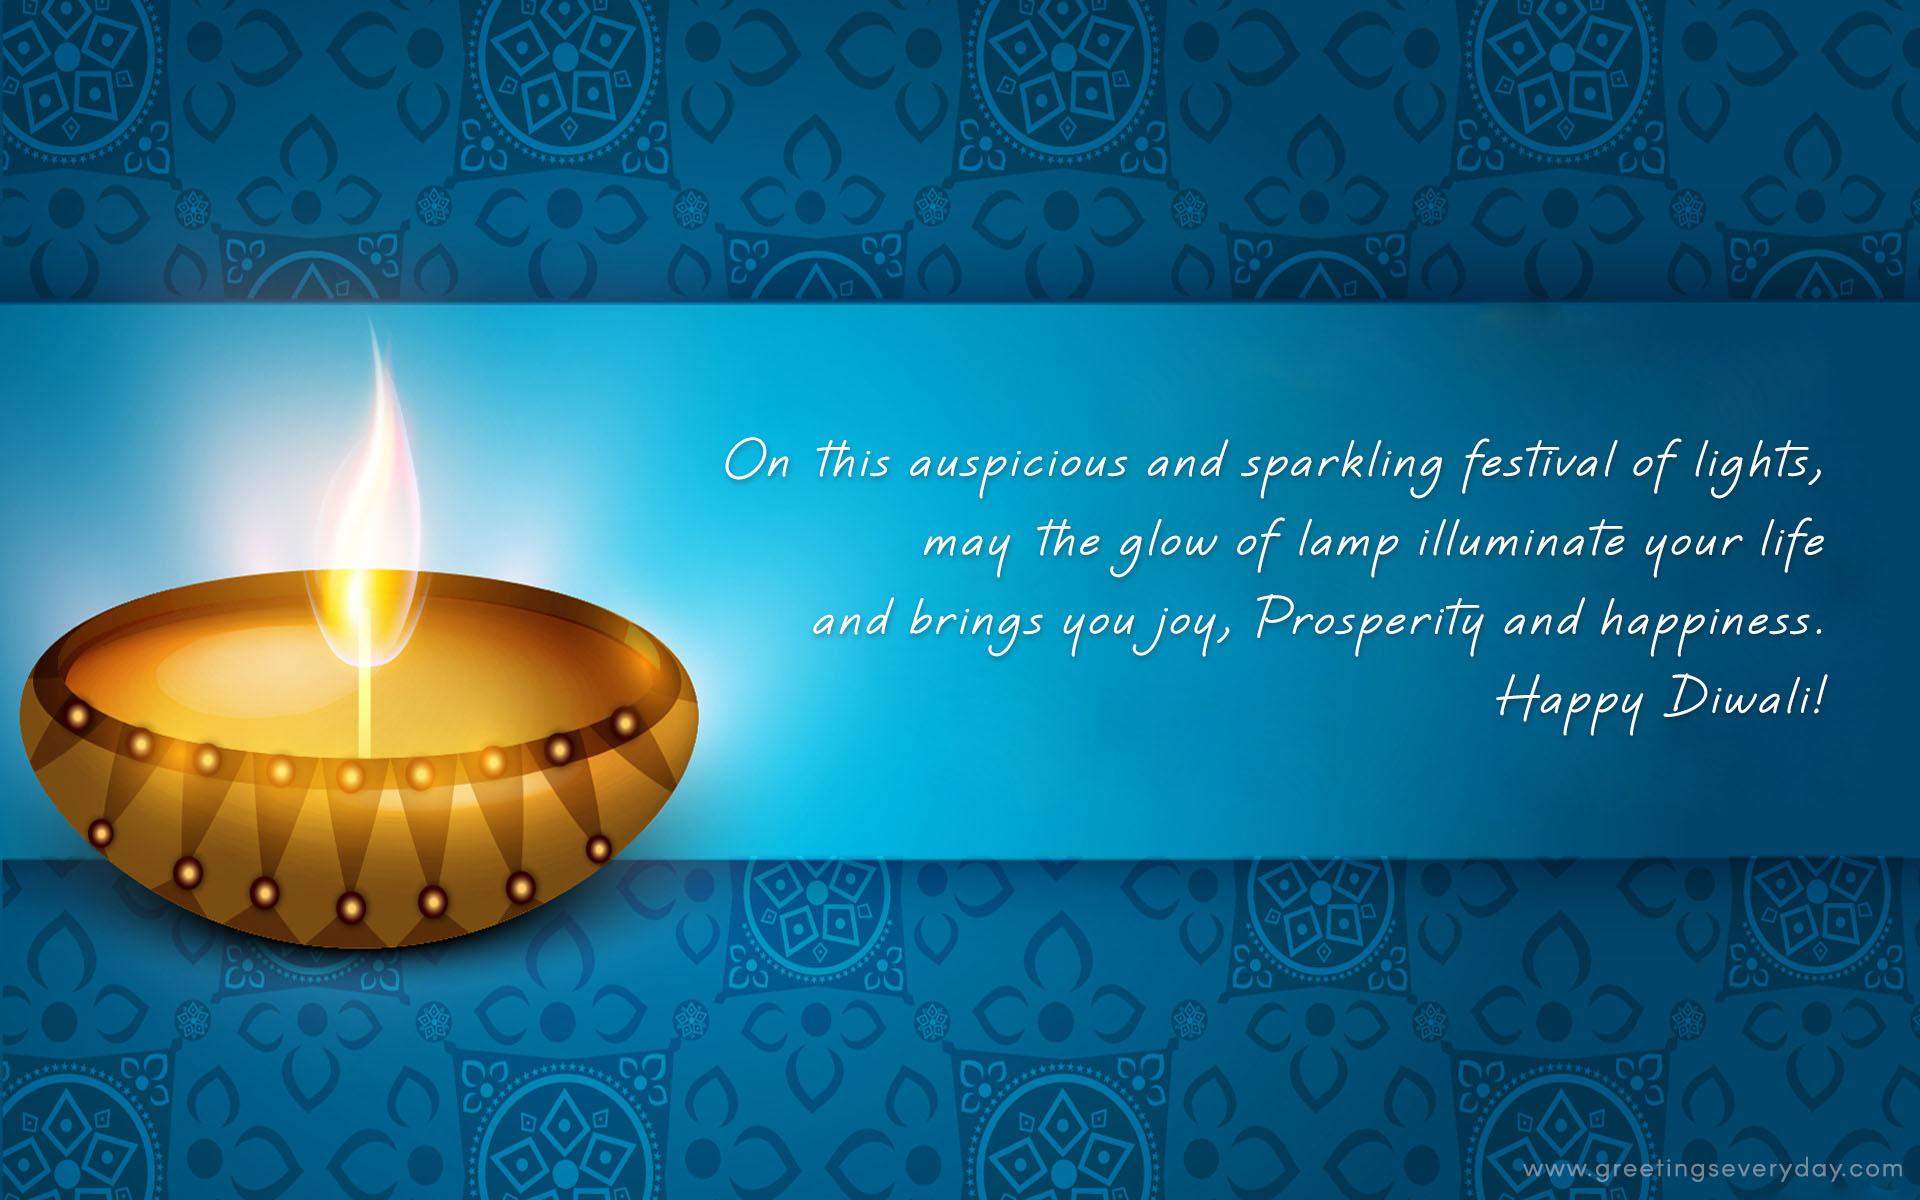 Happy {Deepavali} Diwali Image, 3D GIF, HD Pics & Photo